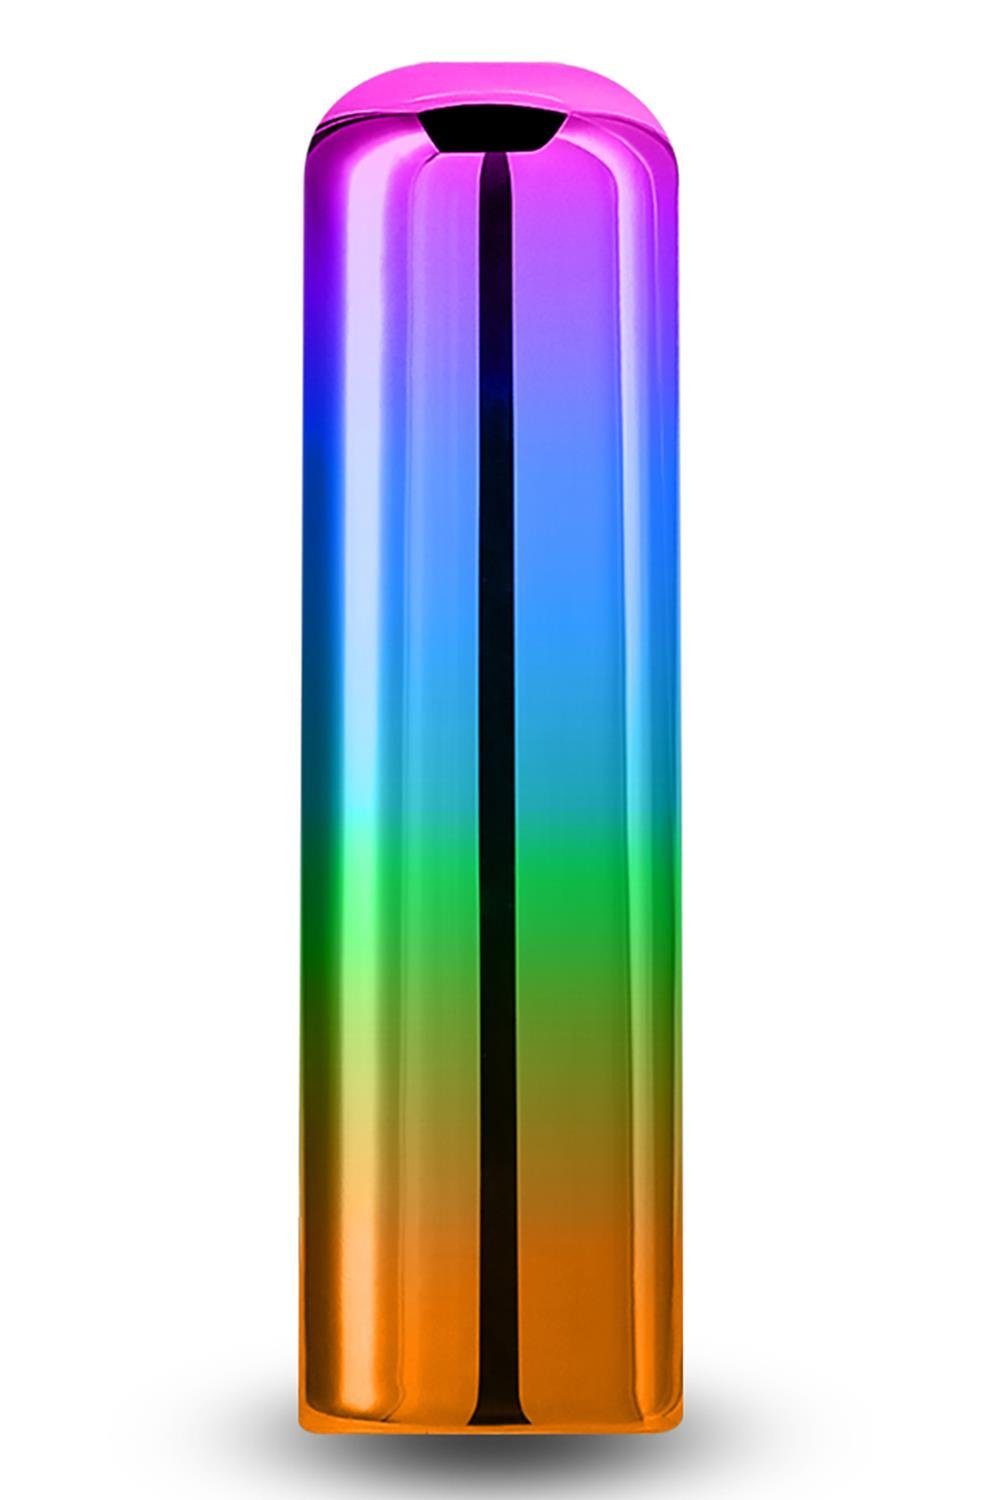 Rainbow Small Mini-Vibrator Chroma NS Novelties